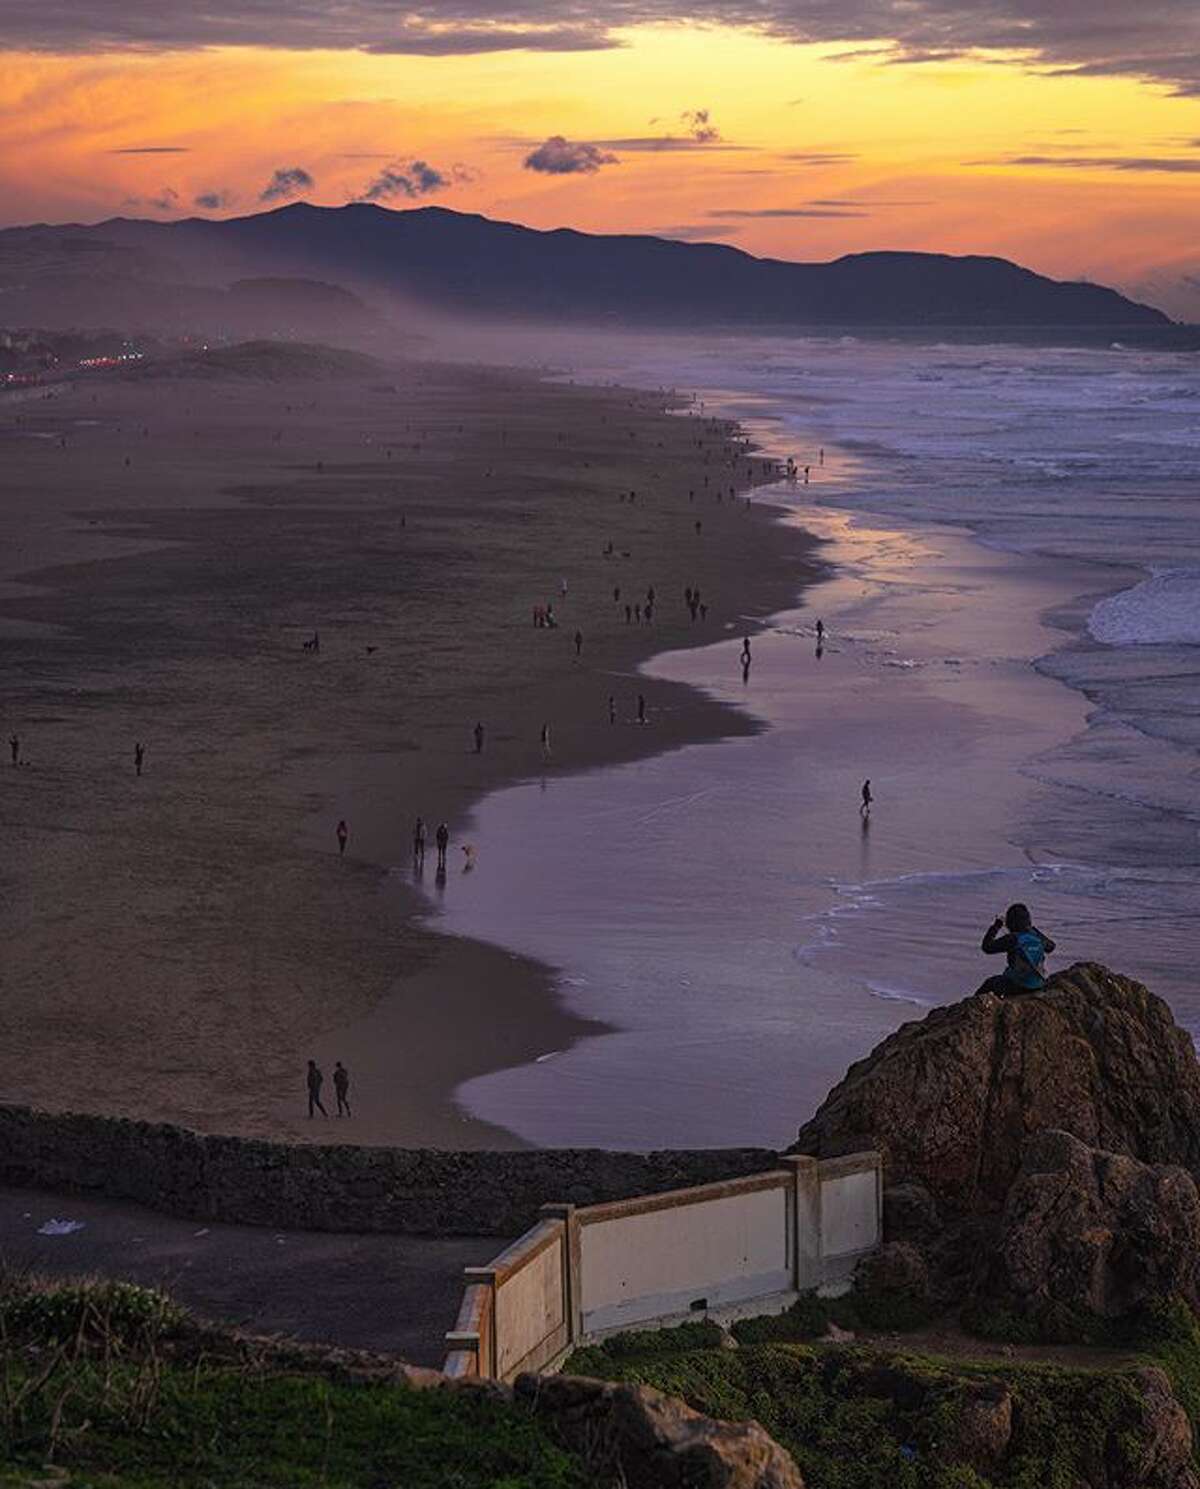 Sunset at Ocean Beach by @sunjay_chopra